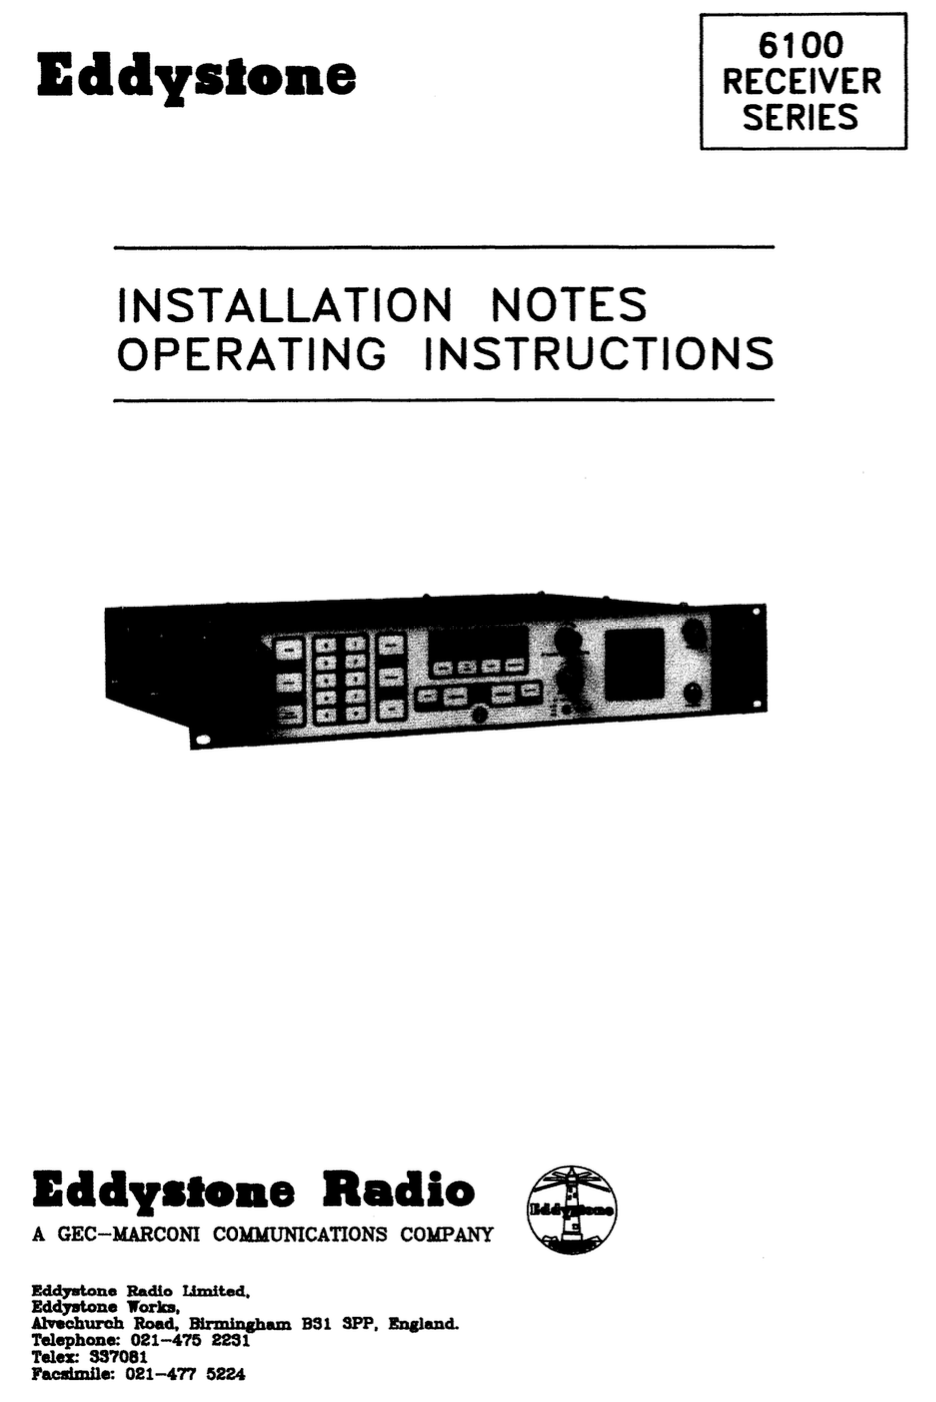 Eddystone Type 6100 Receiver - Instruction Manual